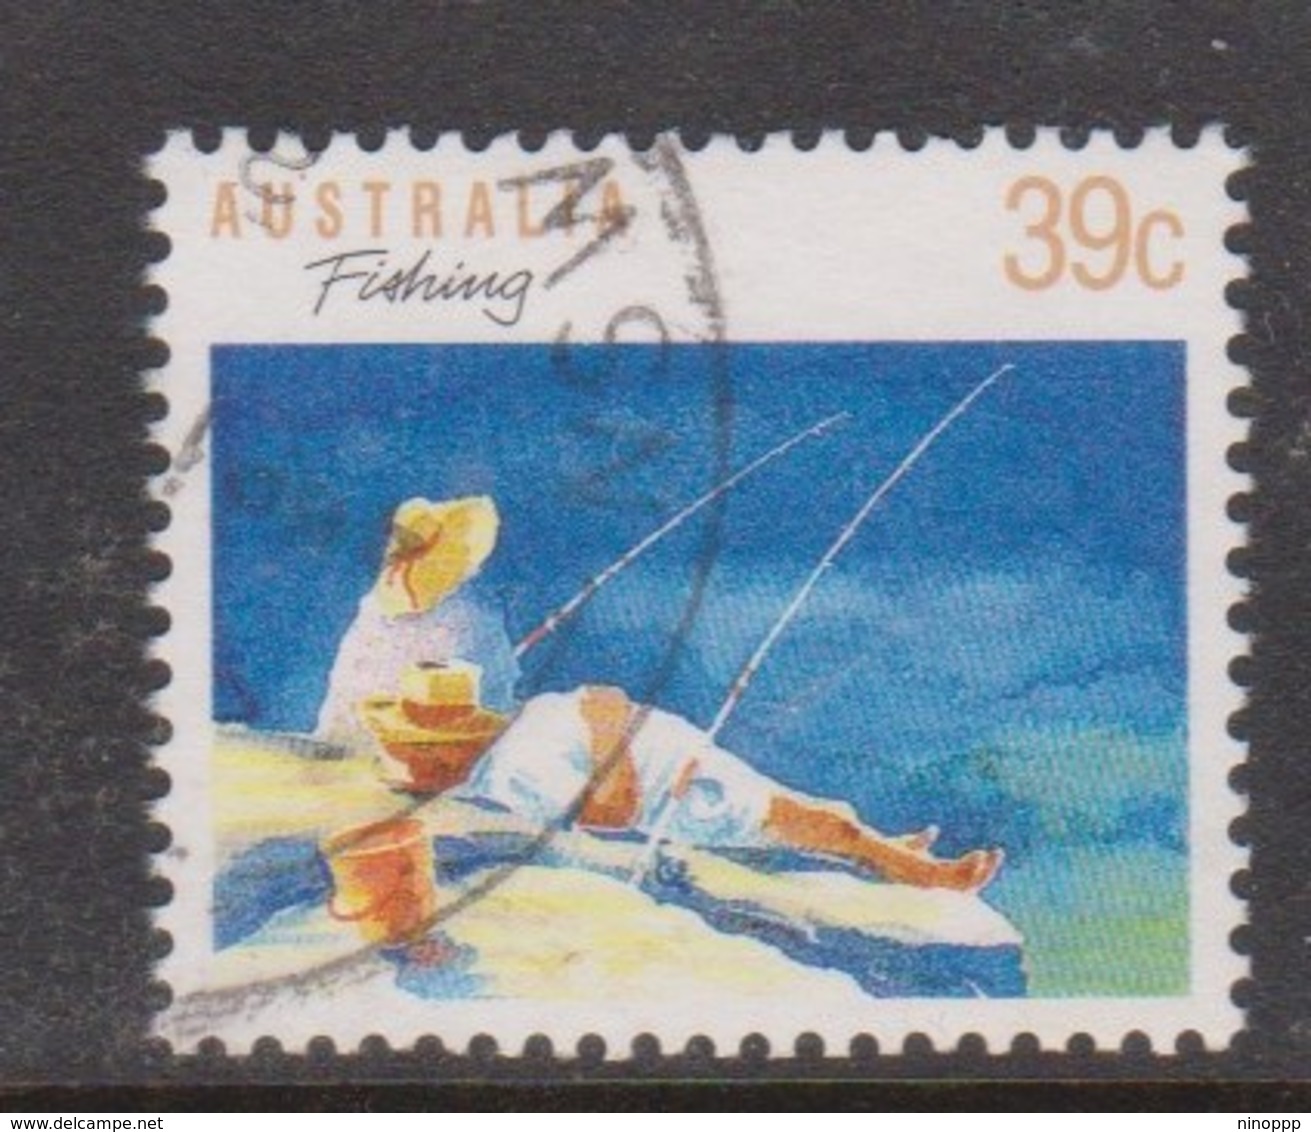 Australia ASC 1185 1989 Sports 39c Fishing Perf 13 X 13.5, Used - Proofs & Reprints